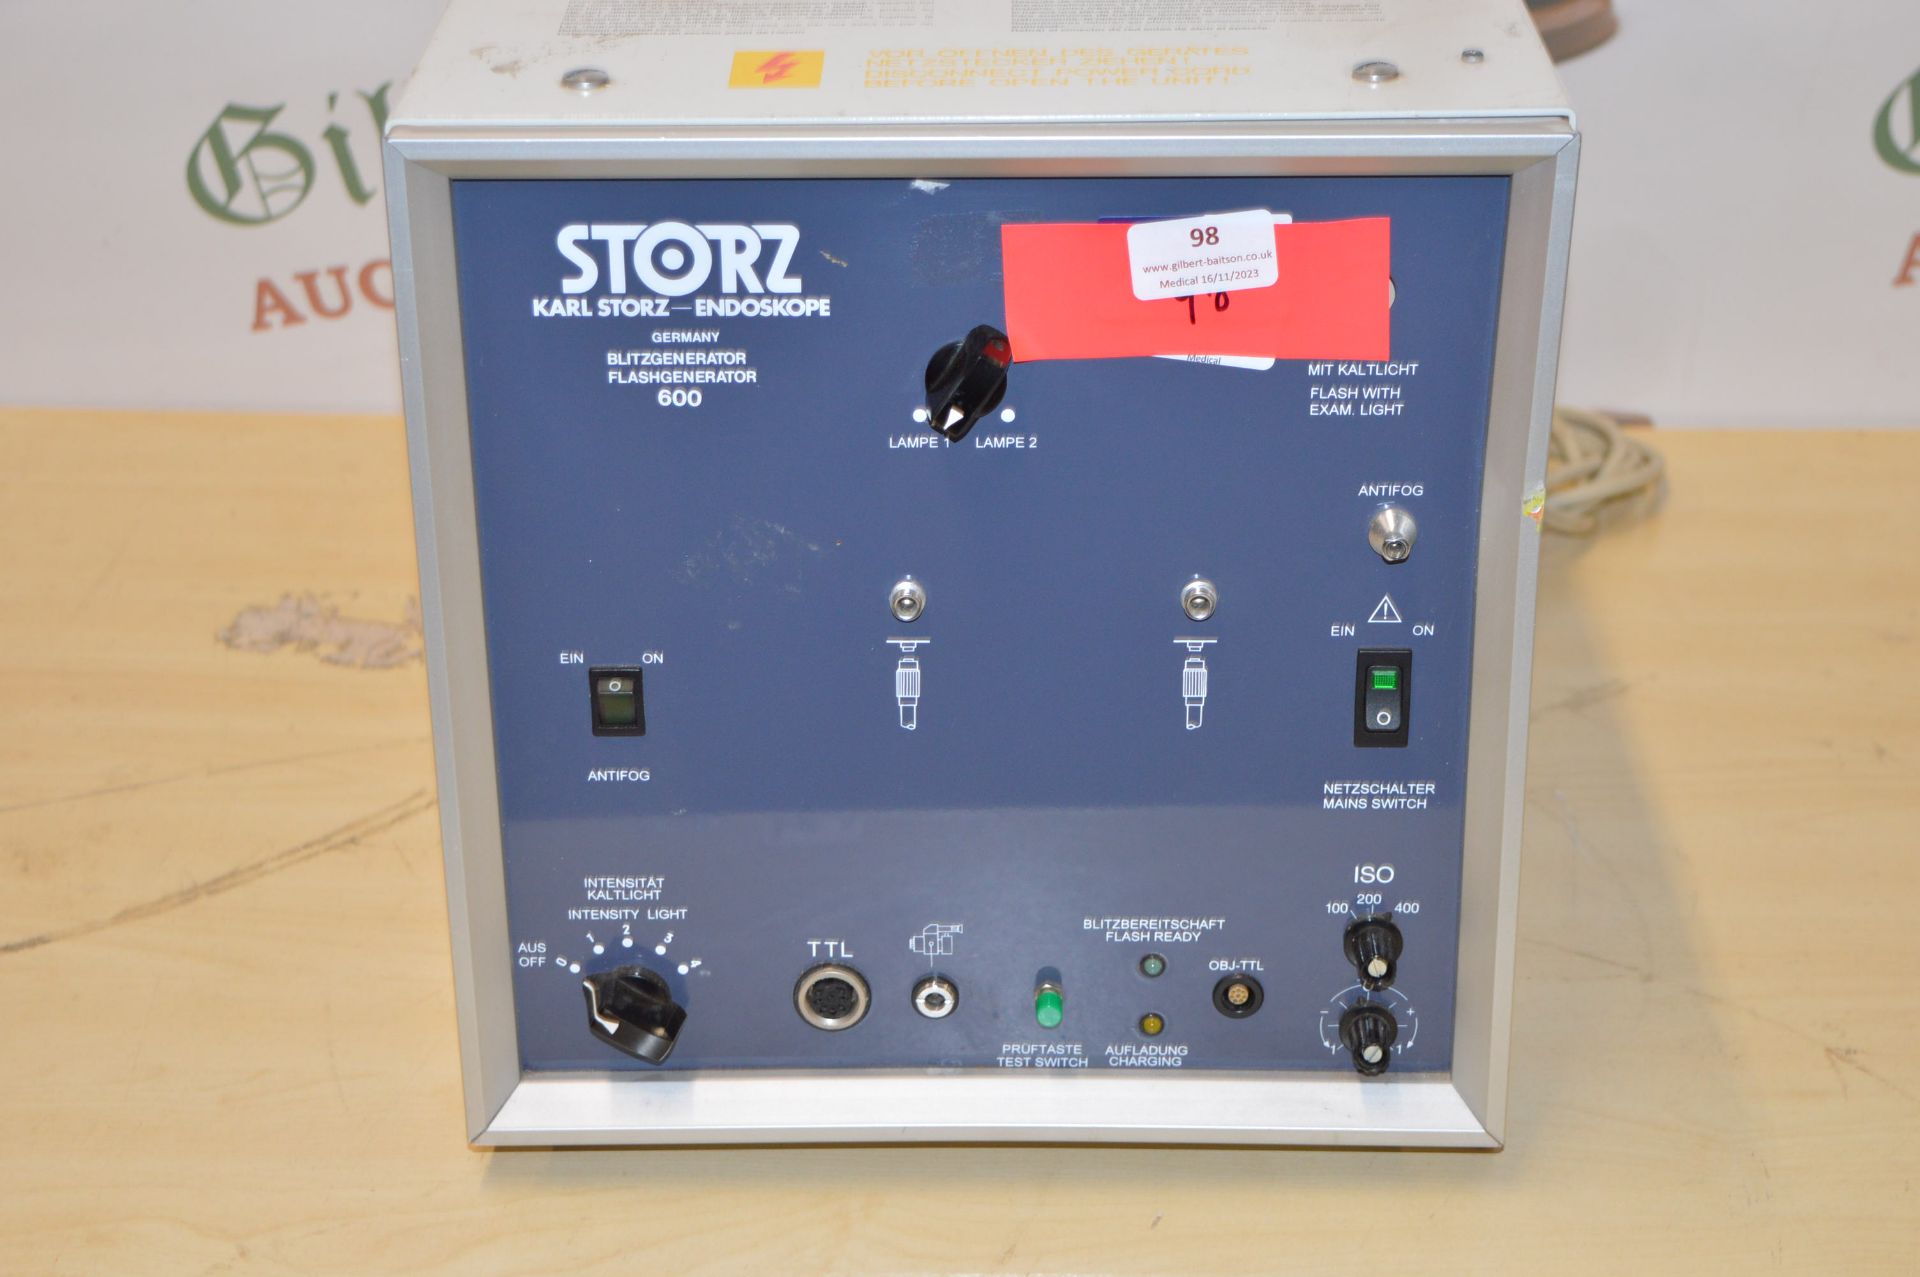 * Karl Storz-Endoskope 600 flash generator